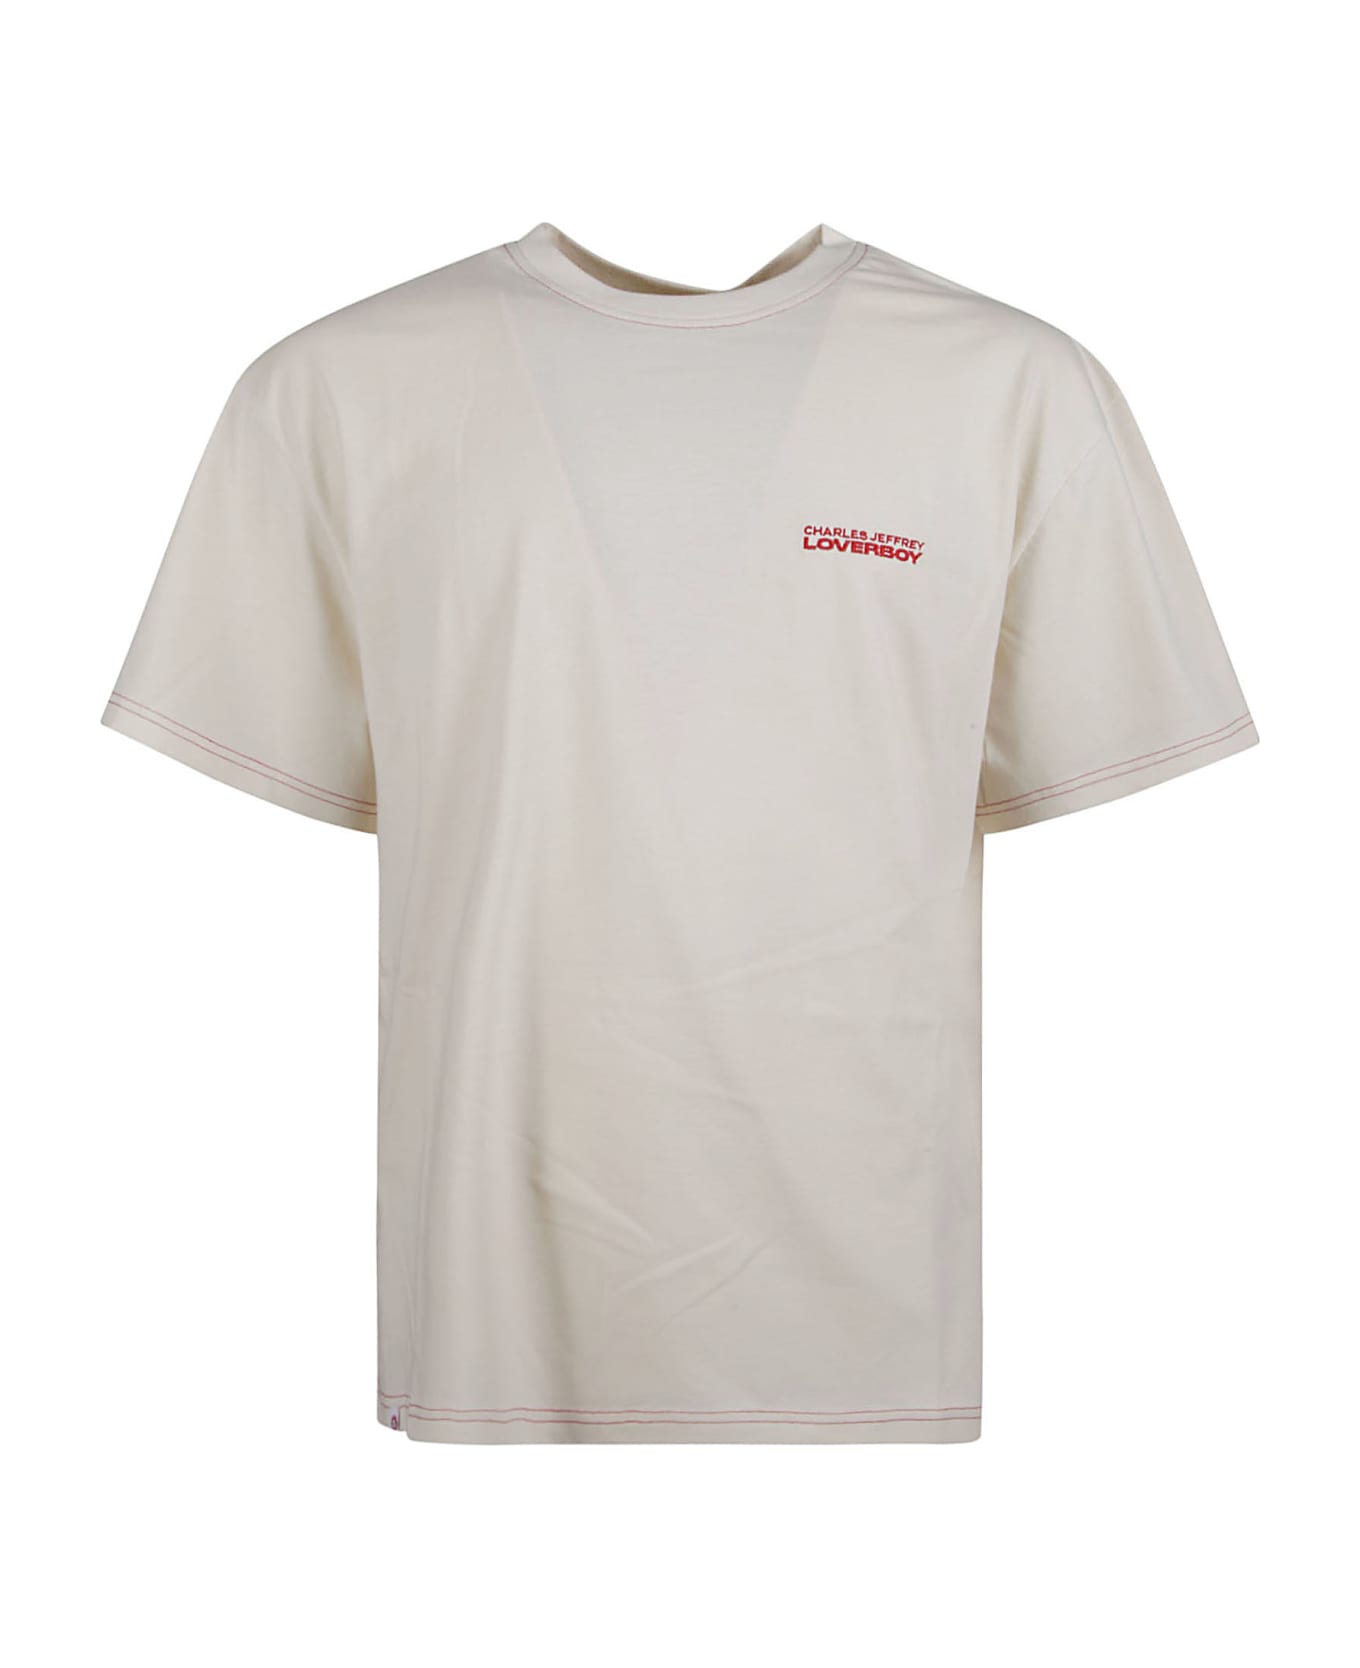 Charles Jeffrey Loverboy Logo Print T-shirt - White